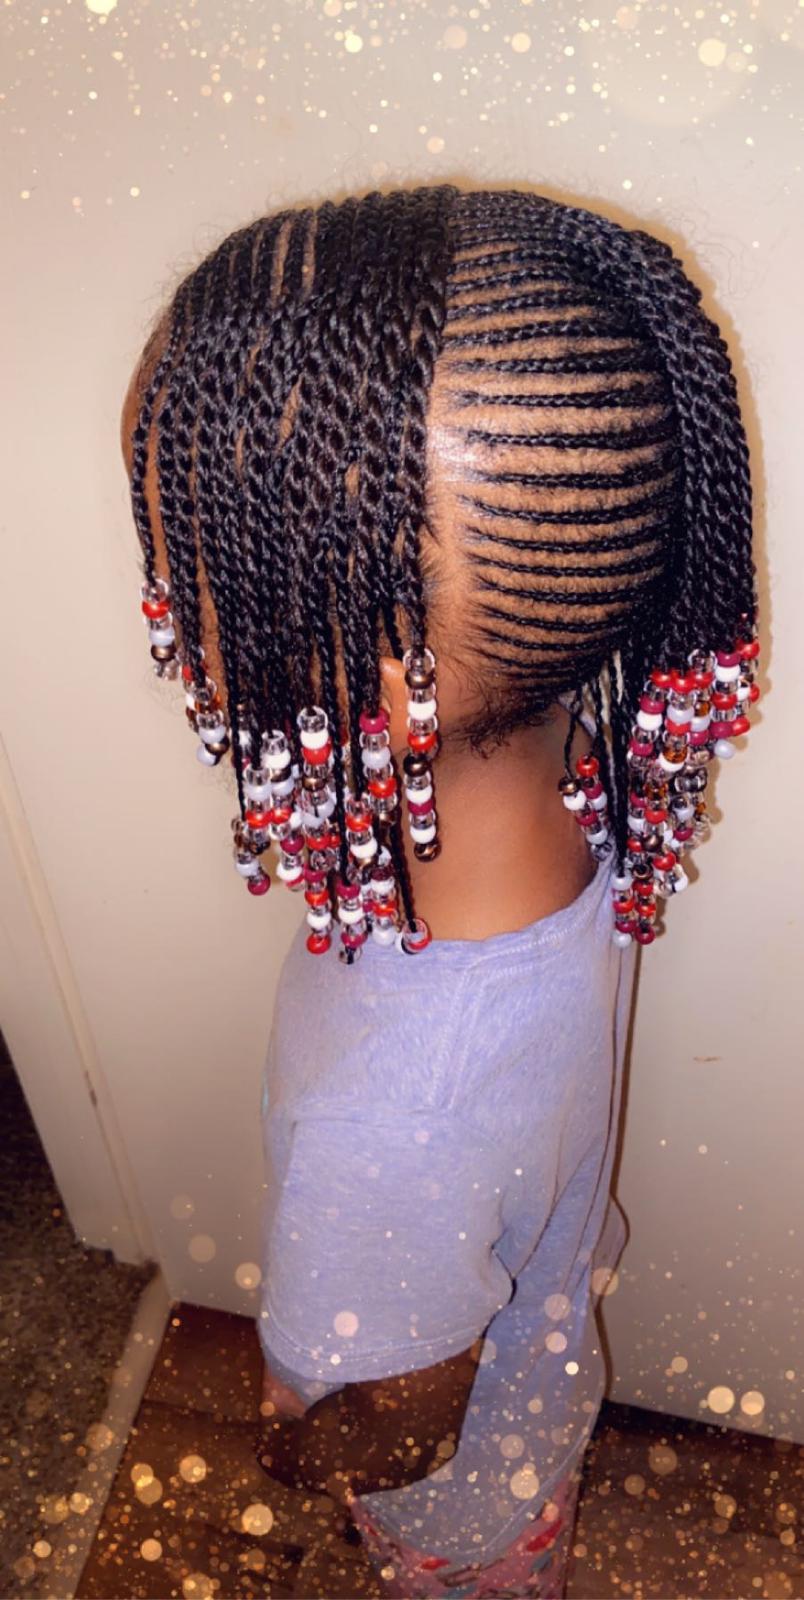 Kadis African Hair Braiding | 6415 Summer Ave #112, Memphis, TN 38134 | Phone: (901) 275-8138